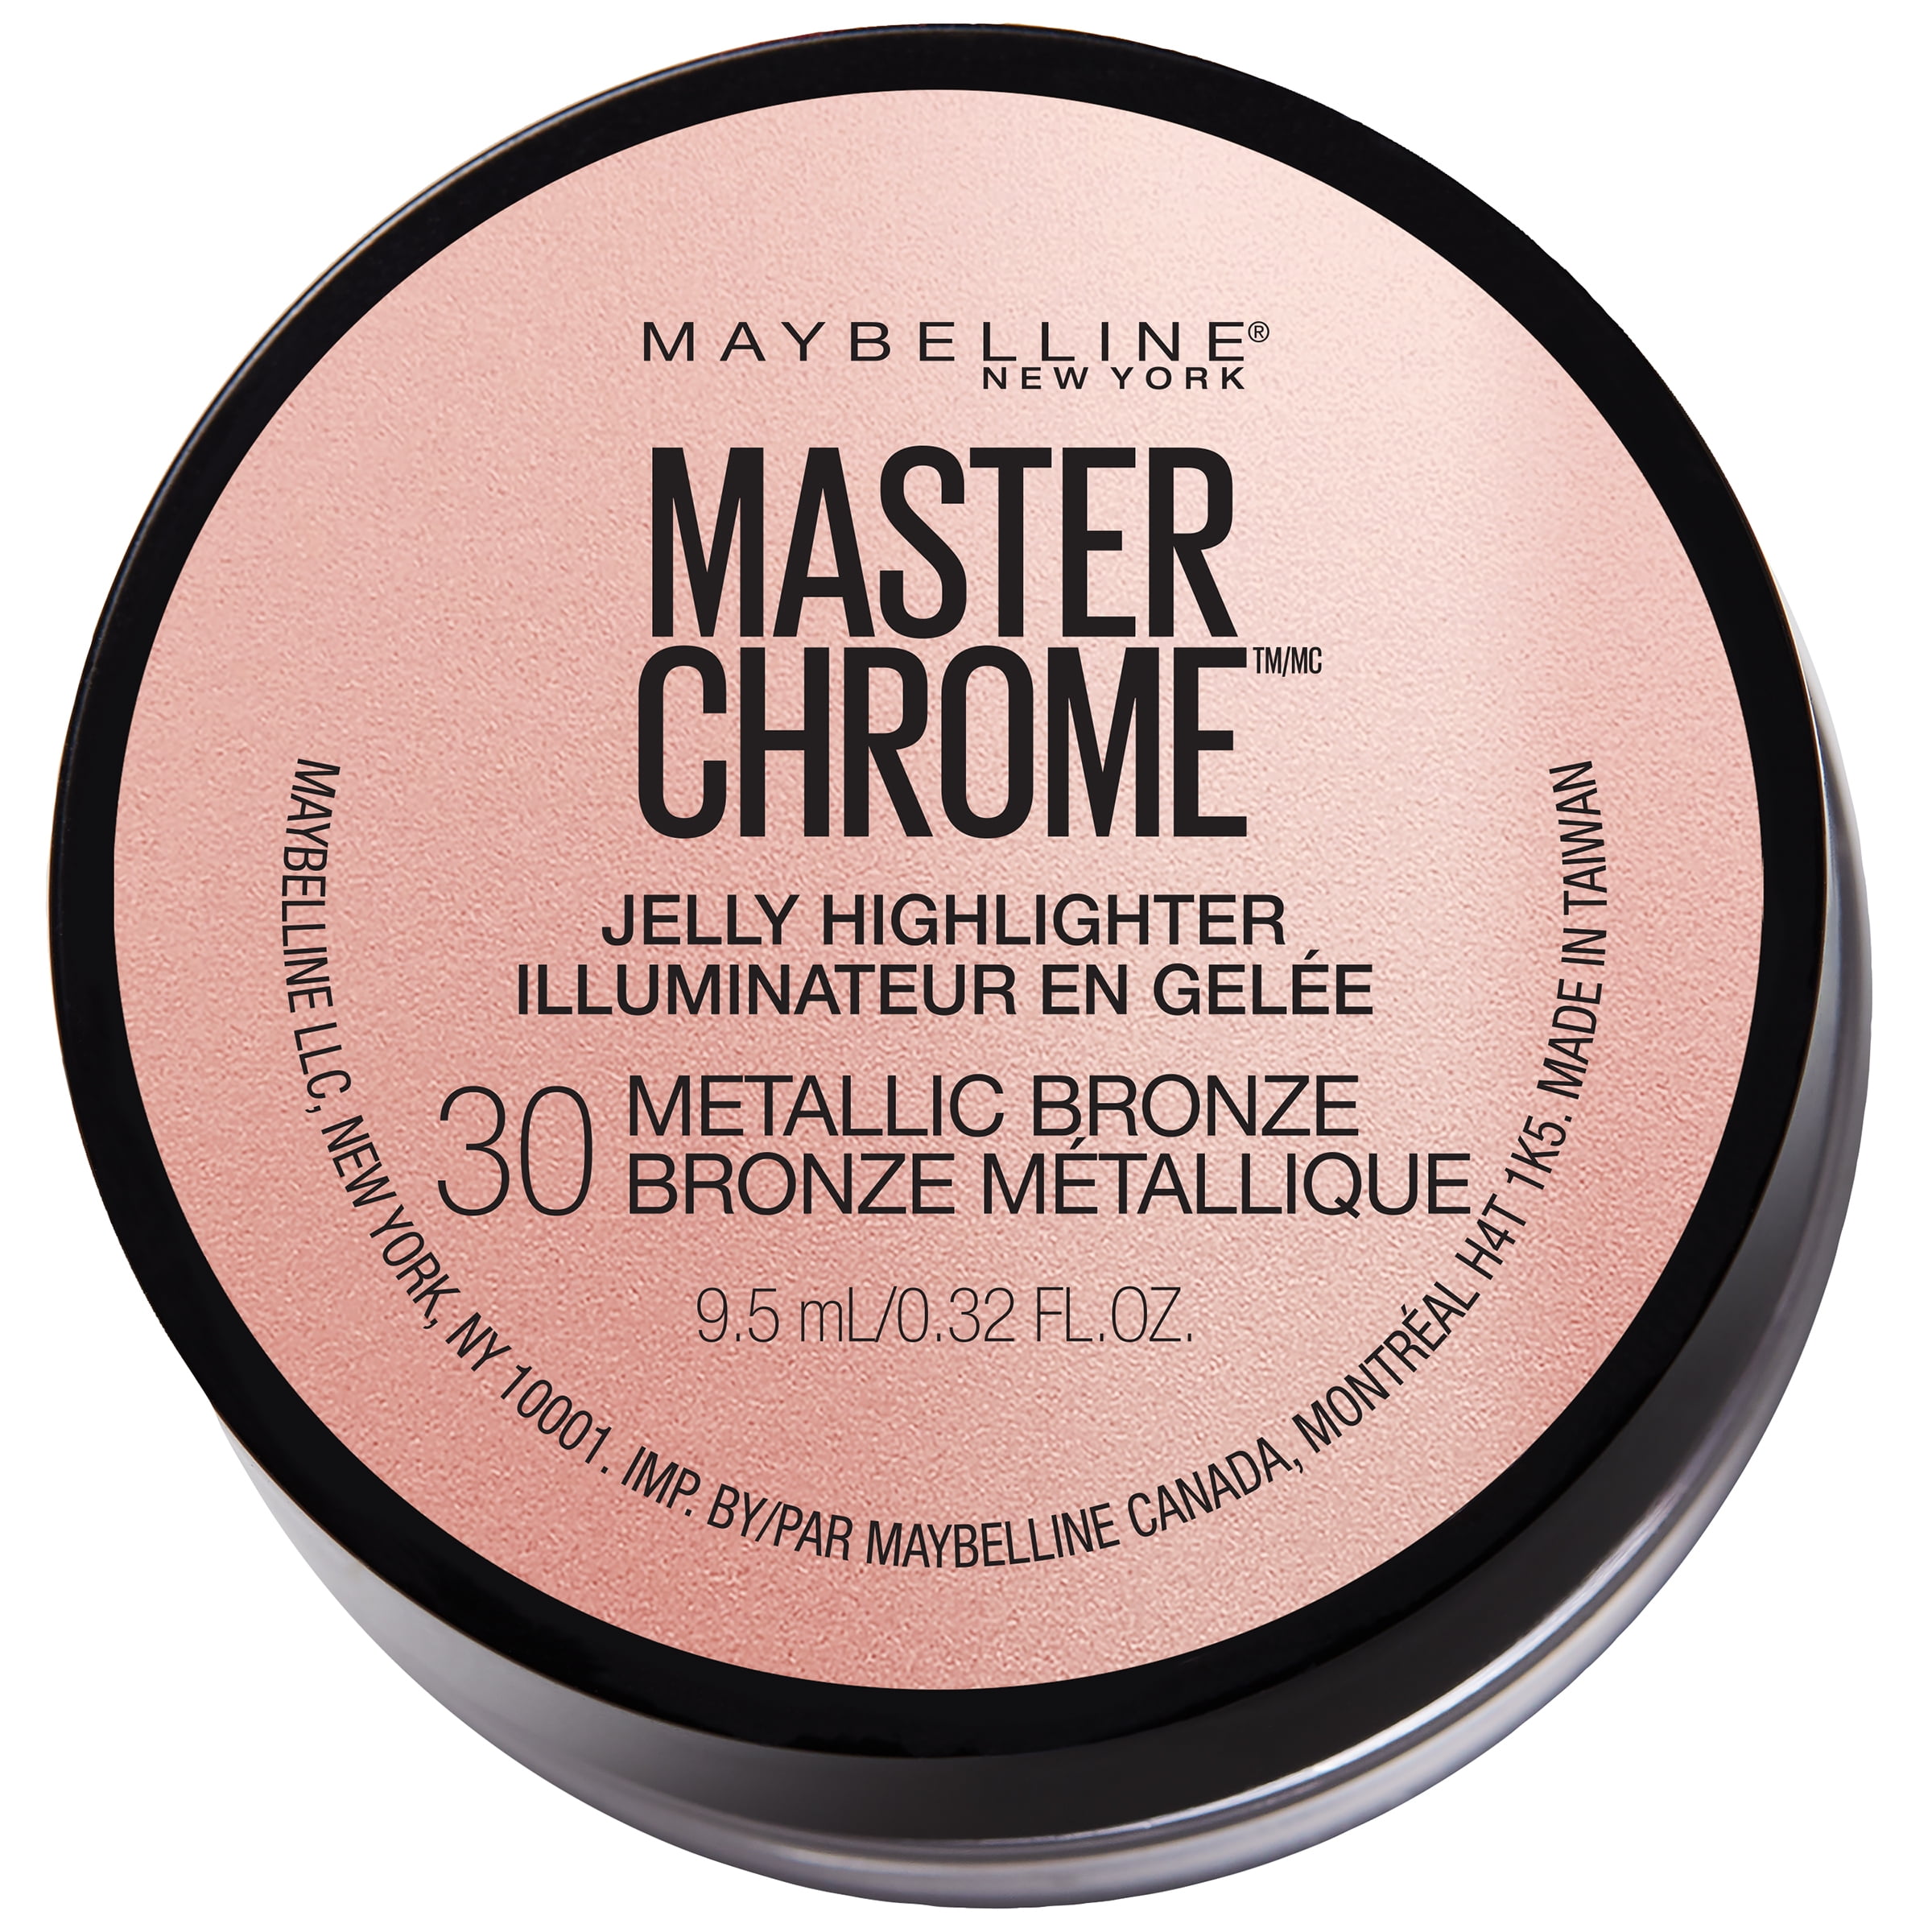 apparat Wade grill Maybelline Master Chrome Jelly Highlighter Face Makeup, Metallic Bronze,  0.32 fl oz - Walmart.com